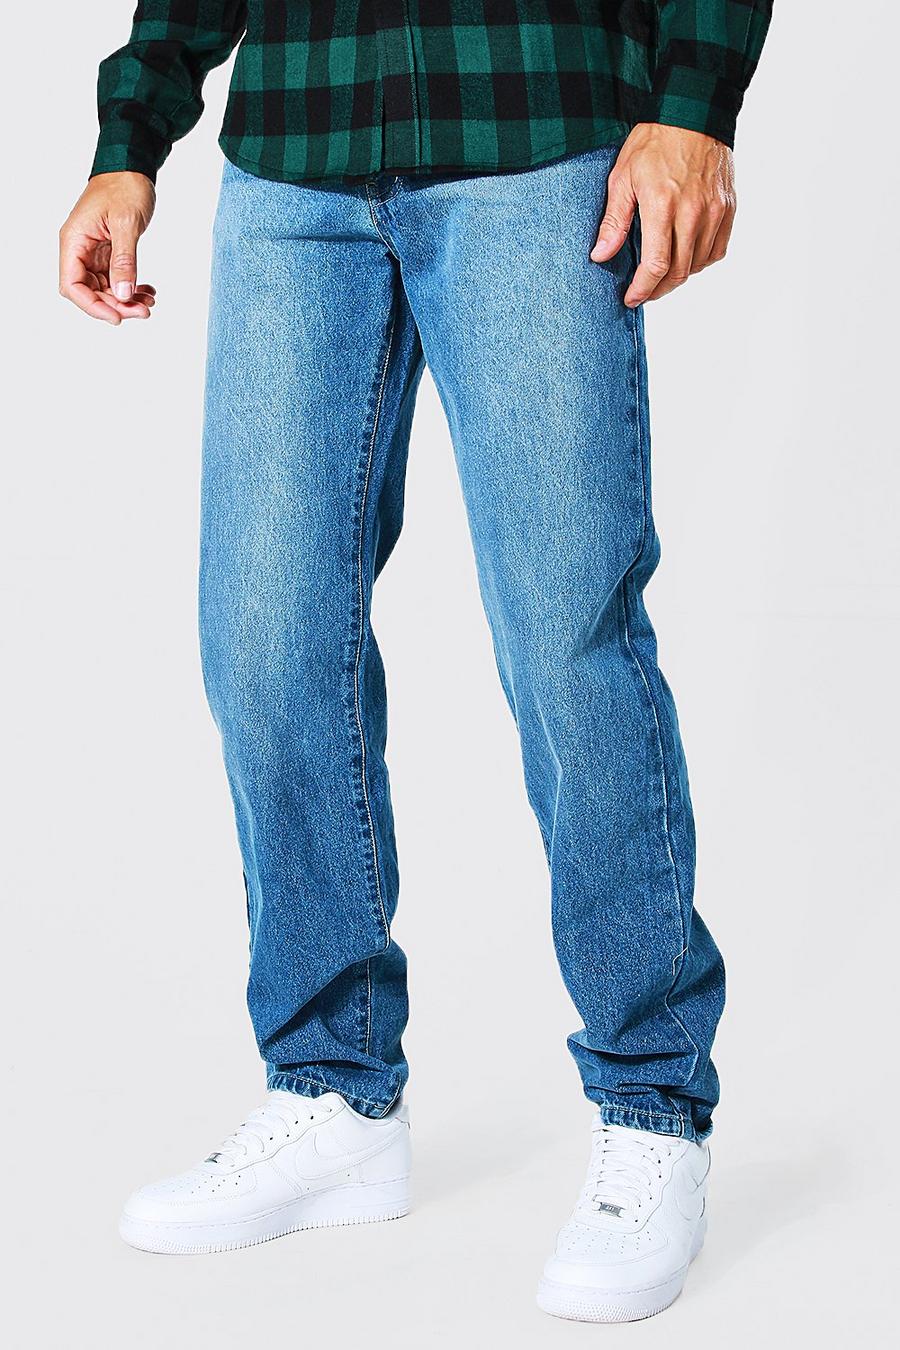 Mid blue azul ג'ינס עם כותנה ממוחזרת בגזרה משוחררת, לגברים גבוהים